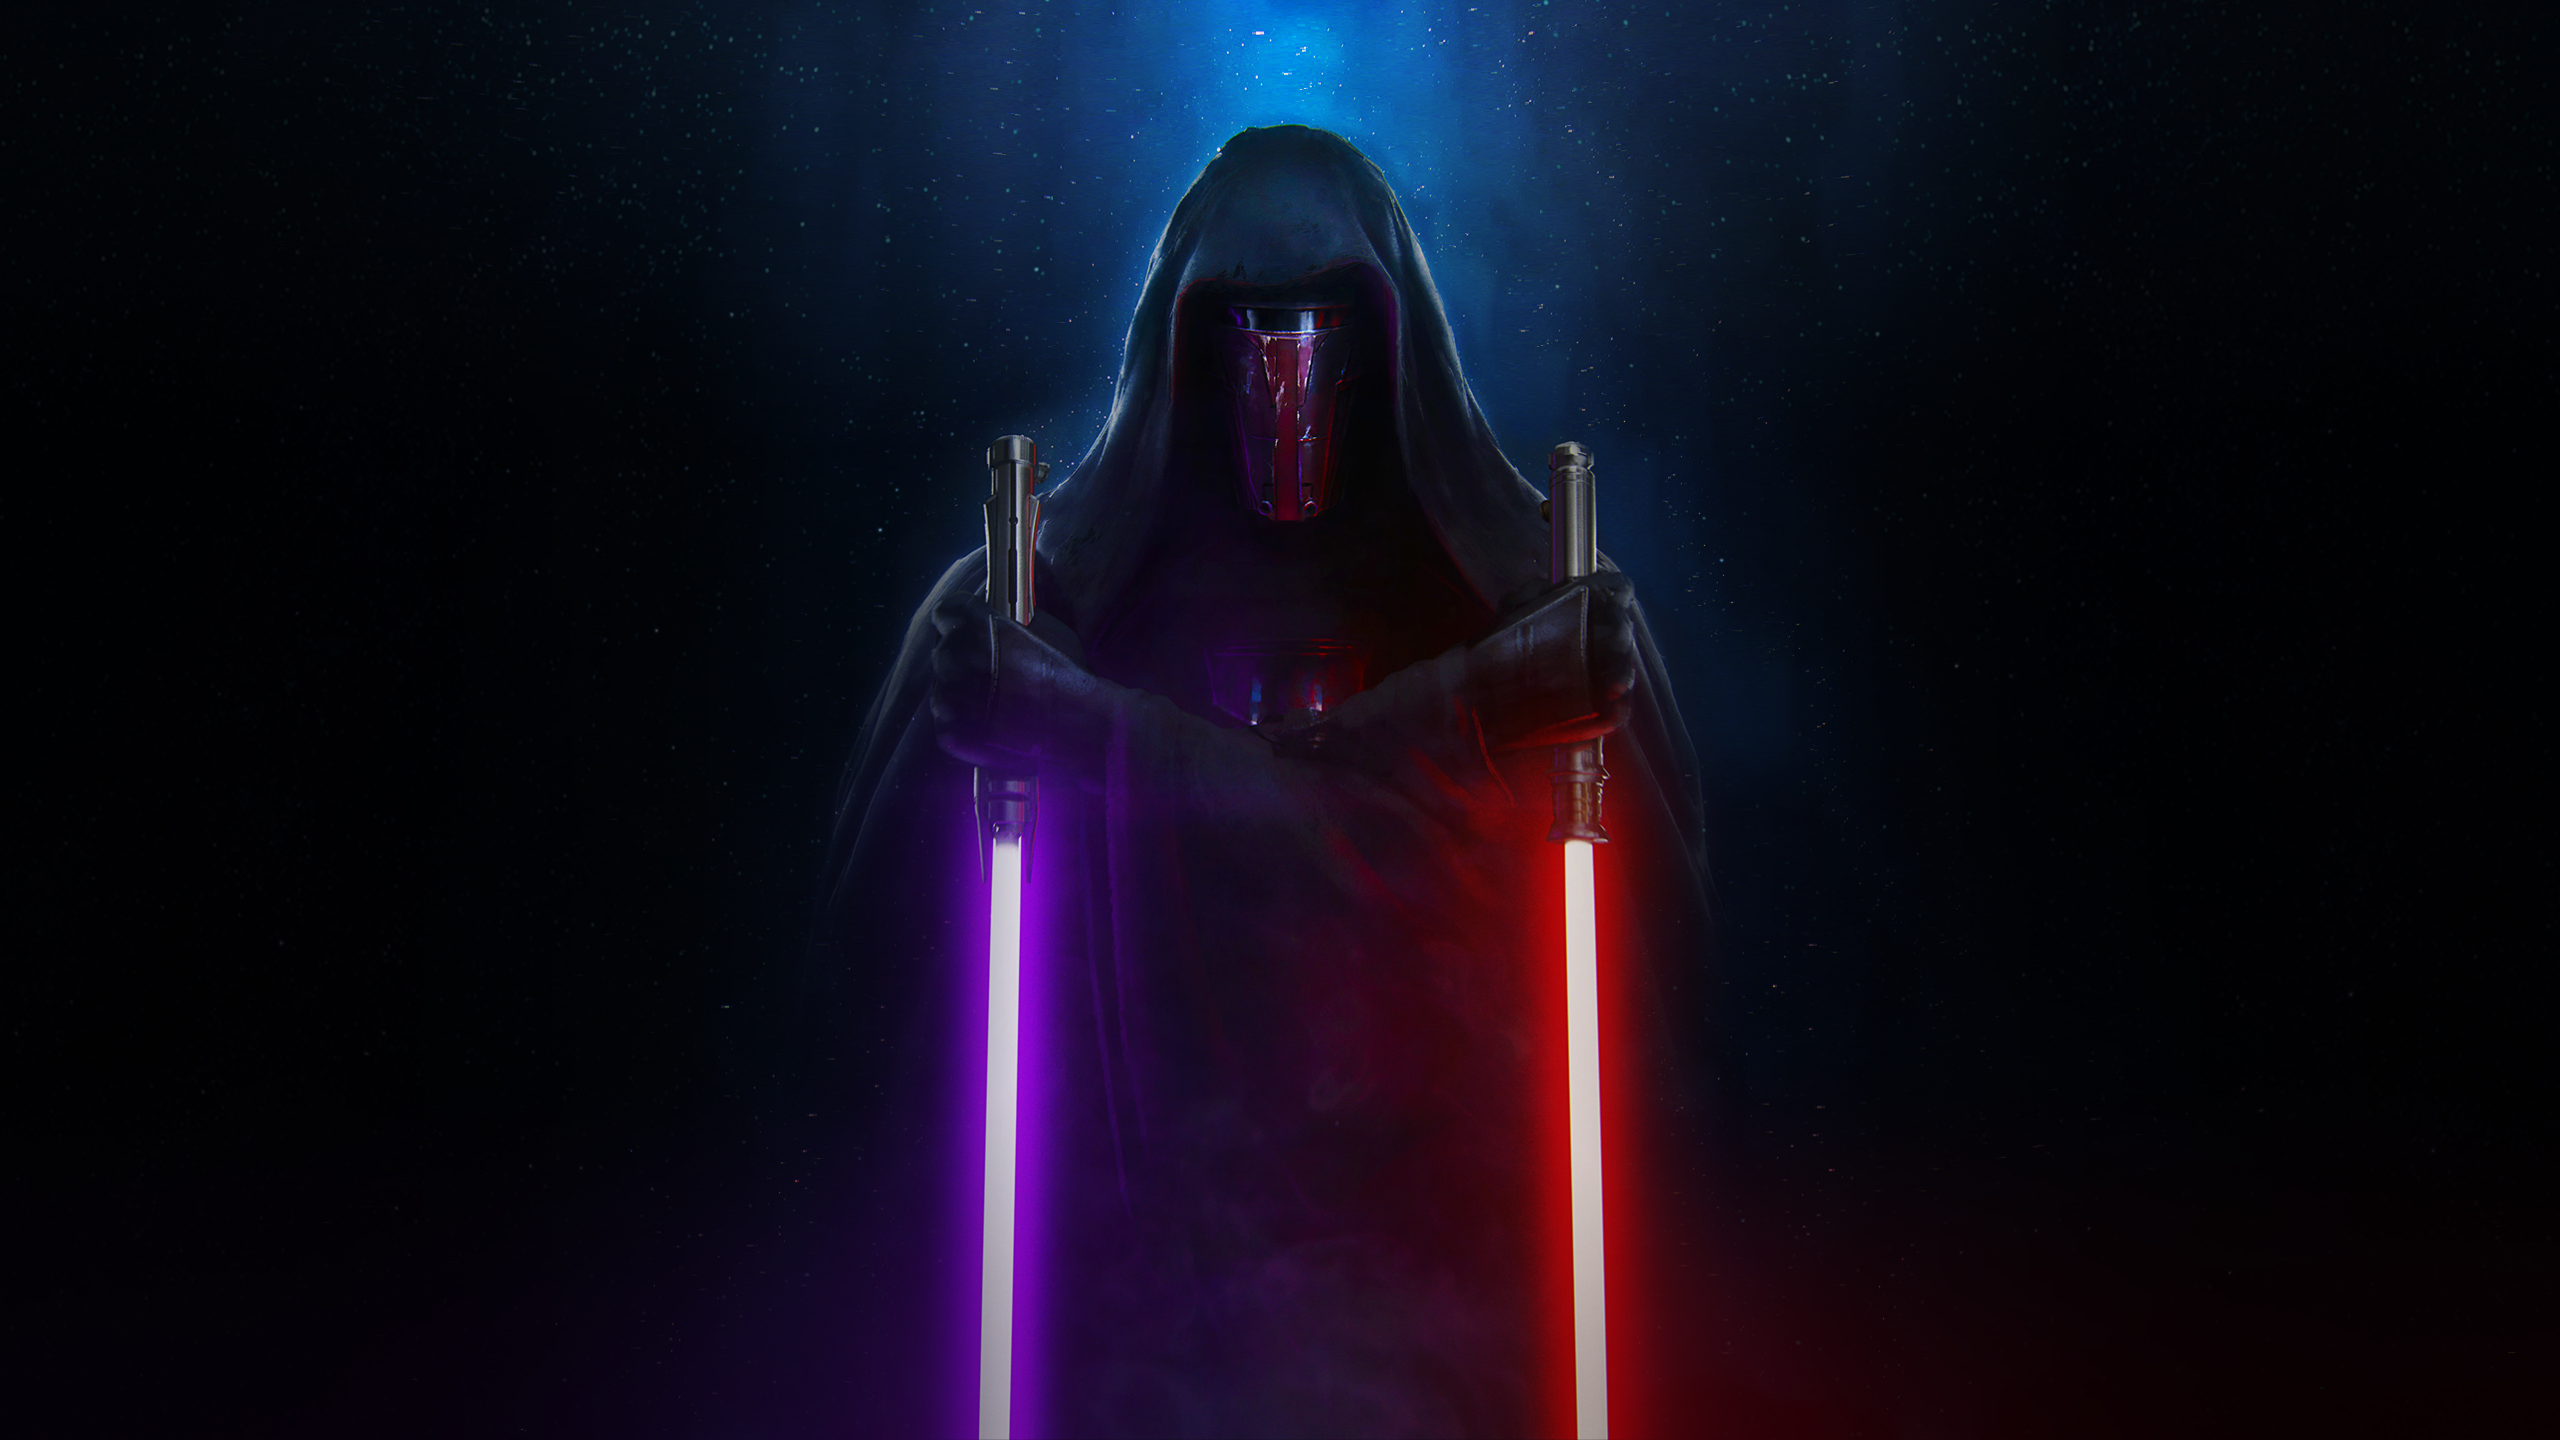 General 2560x1440 Star Wars Darth Revan science fiction Sith lightsaber mask hoods artwork